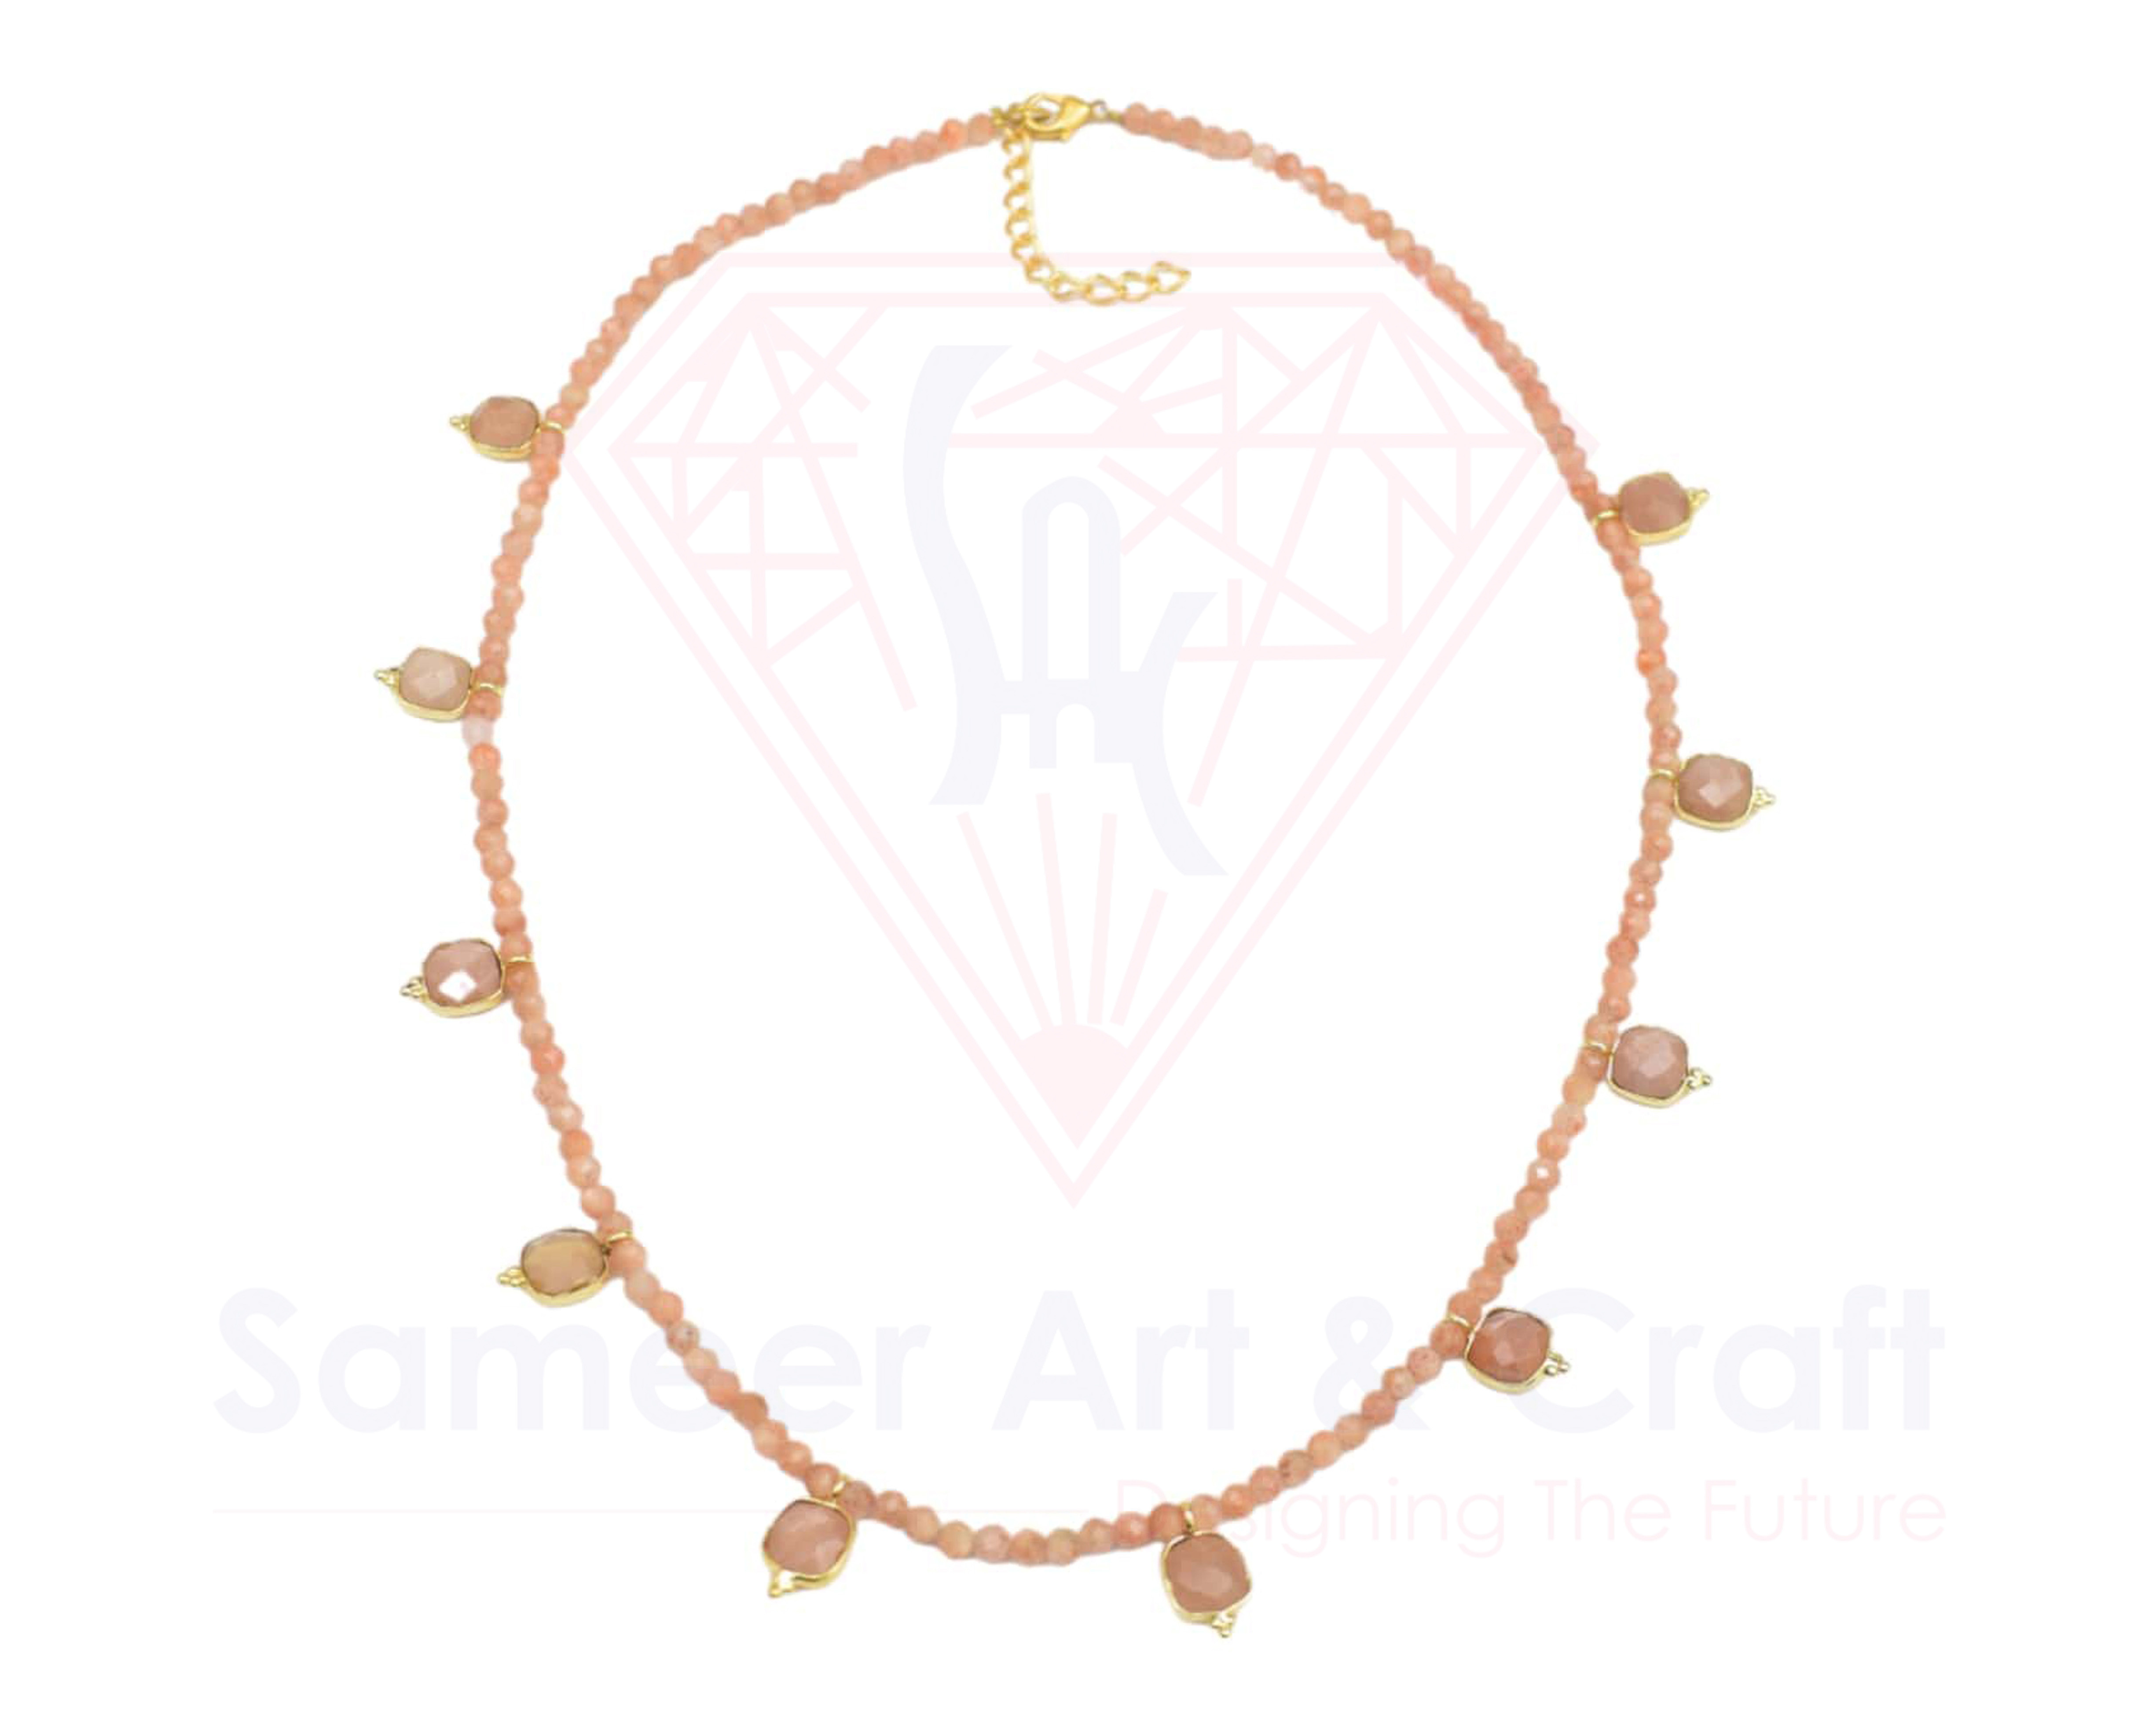 Natural Gemstone Jewelry Handmade Fashion Pendant Necklace